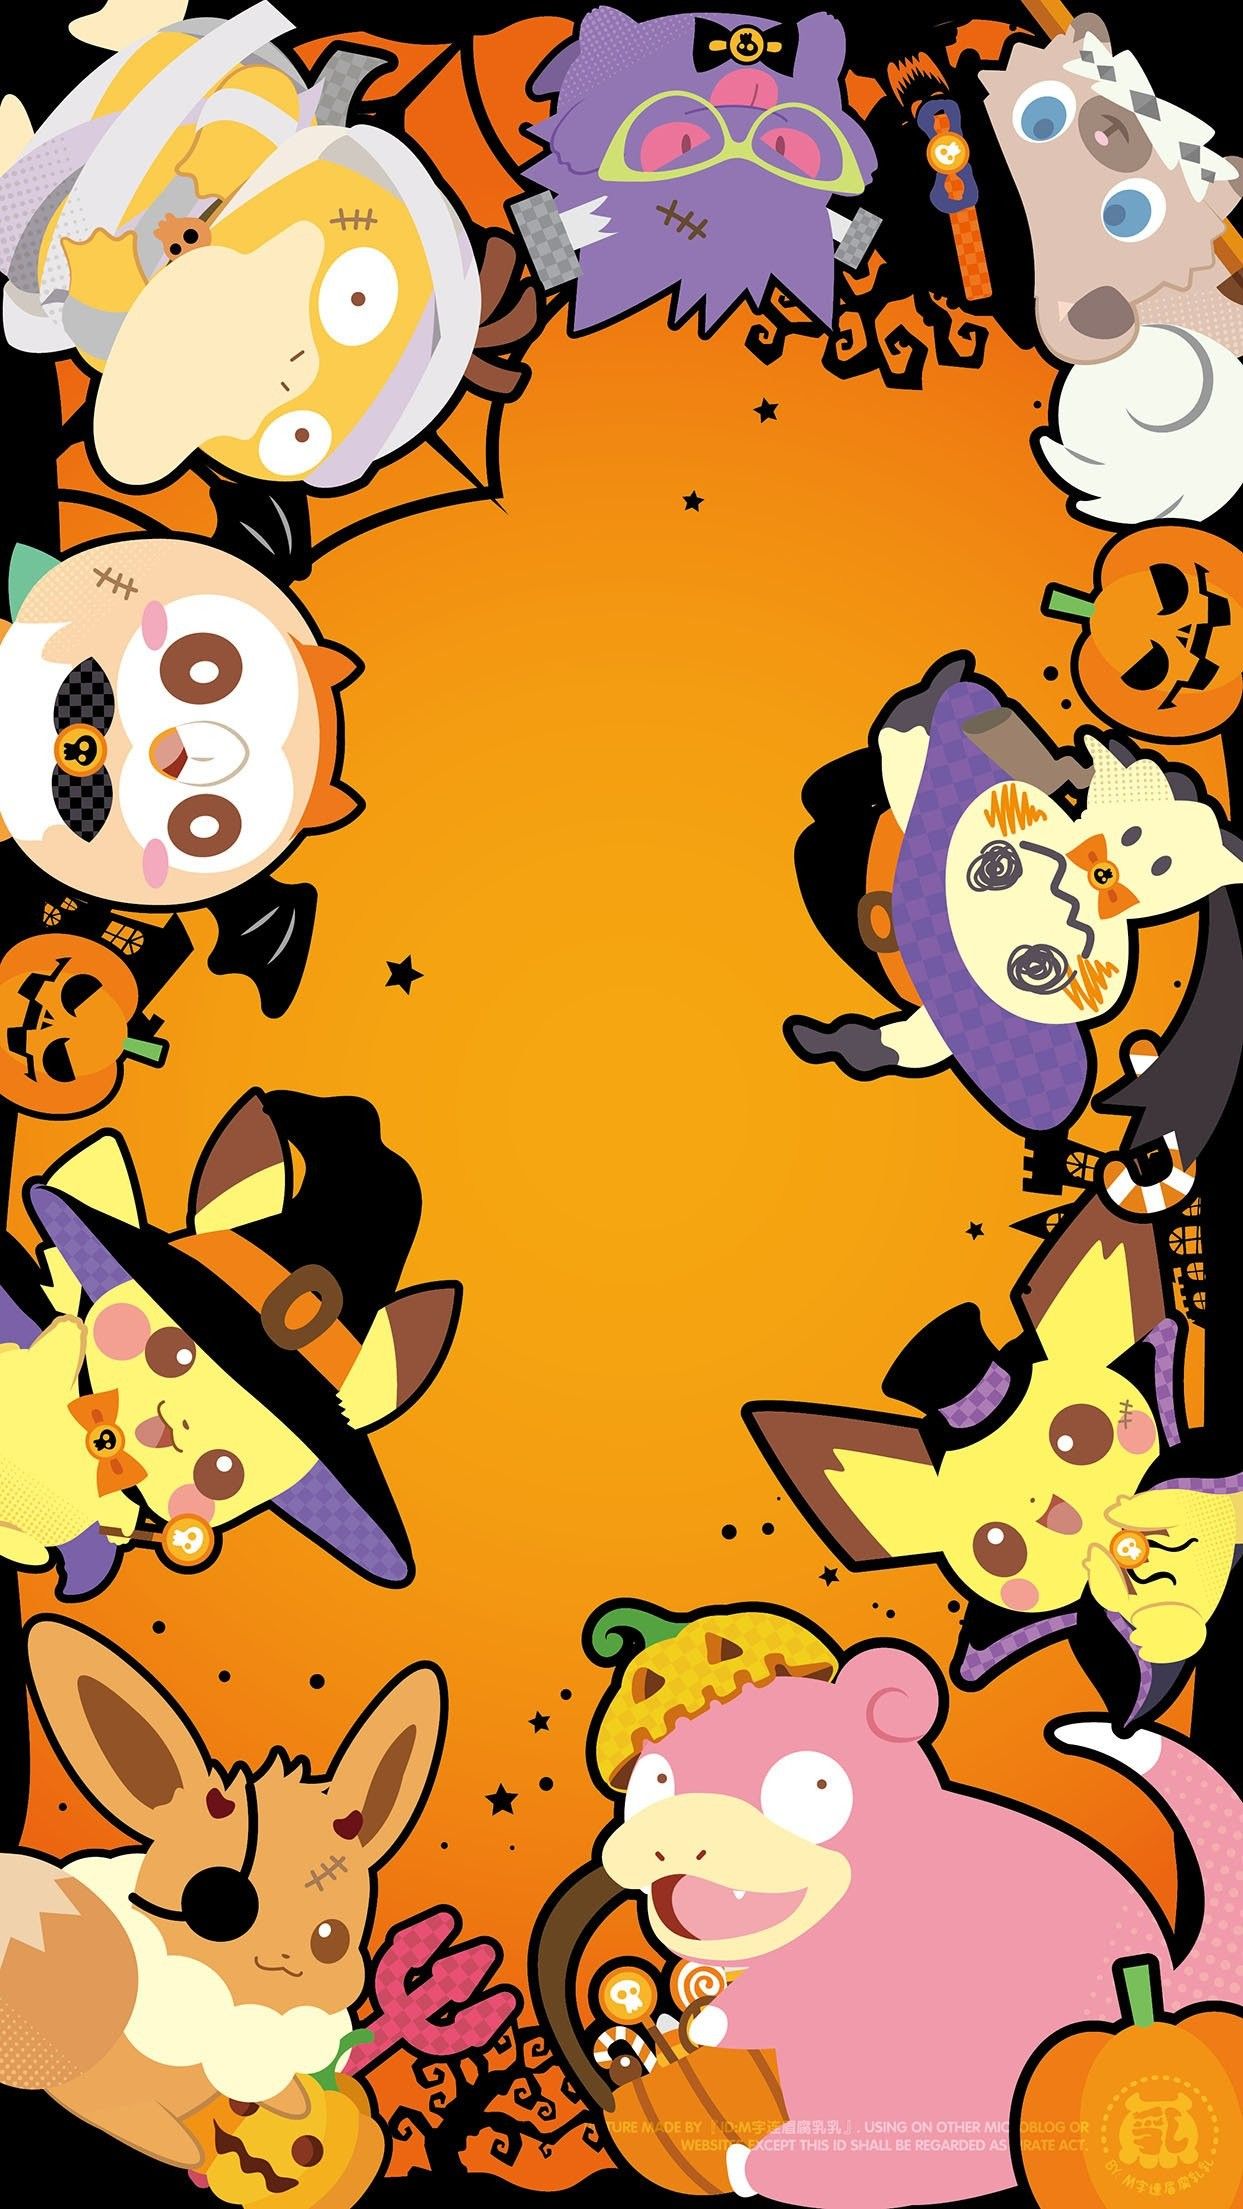 Phone wallpaper. Cute pokemon wallpaper, Ghost pokemon, Pokemon halloween